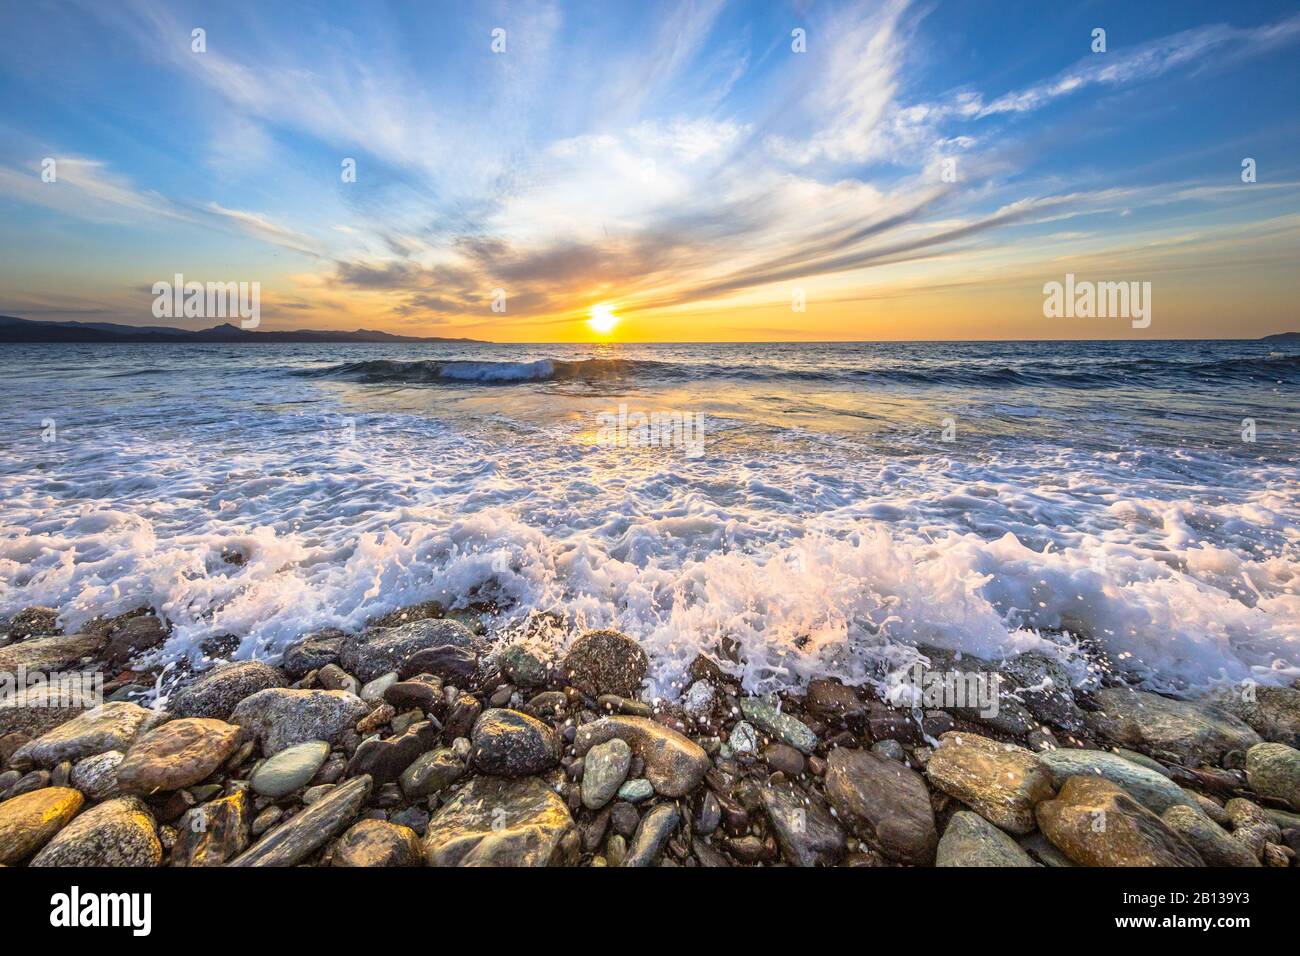 Waves of the Mediterranean sea breaking on pebble beach near Farinole Cap Corse, Corsica, France Stock Photo